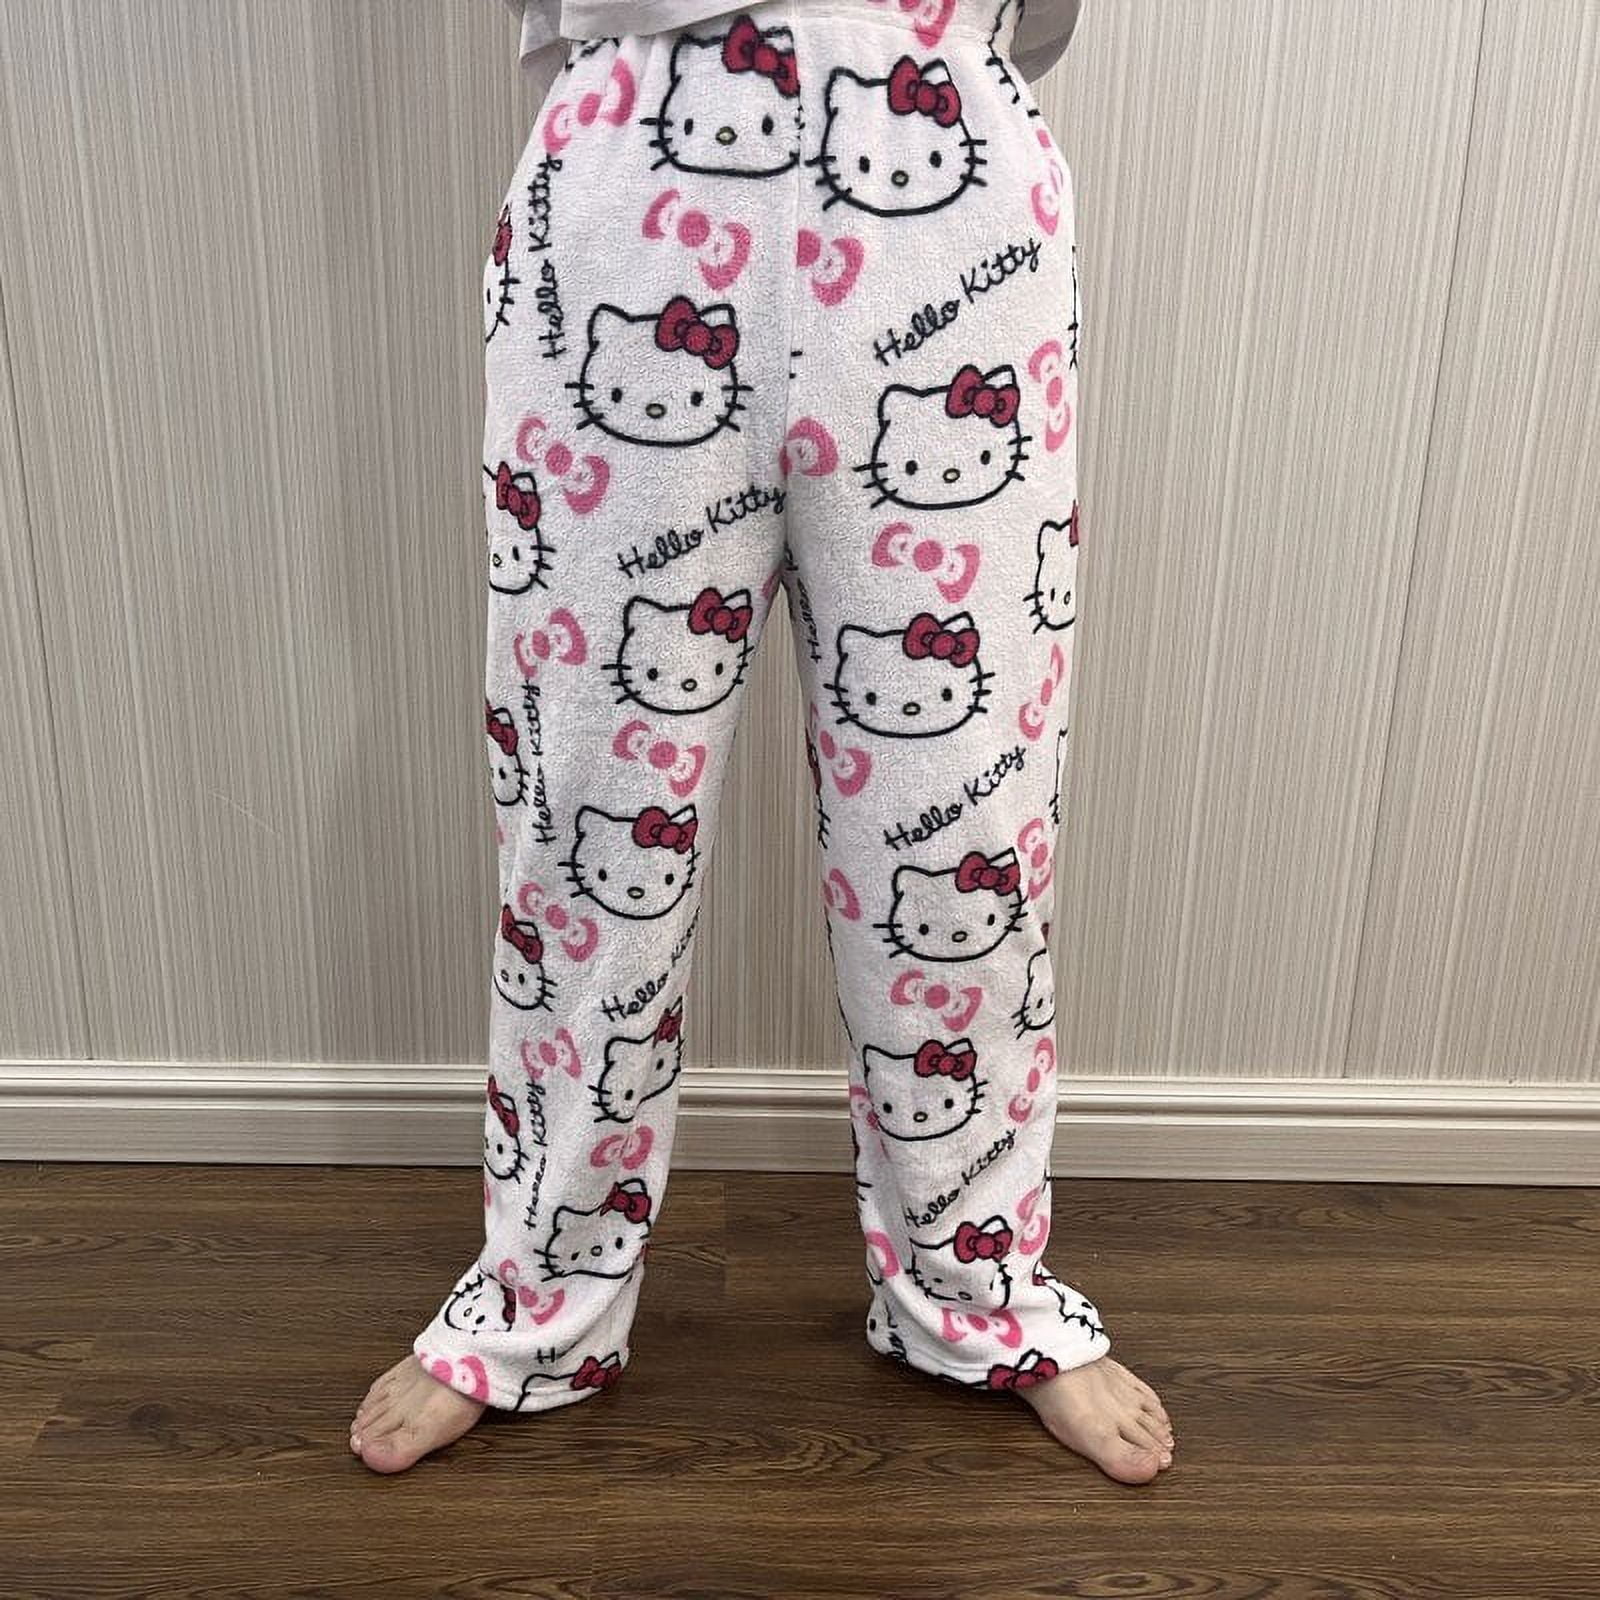 Halloween Sanrio Hello Kitty PJ Pajamas Soft Warm Fuzzy Cute Sleepwear Pants